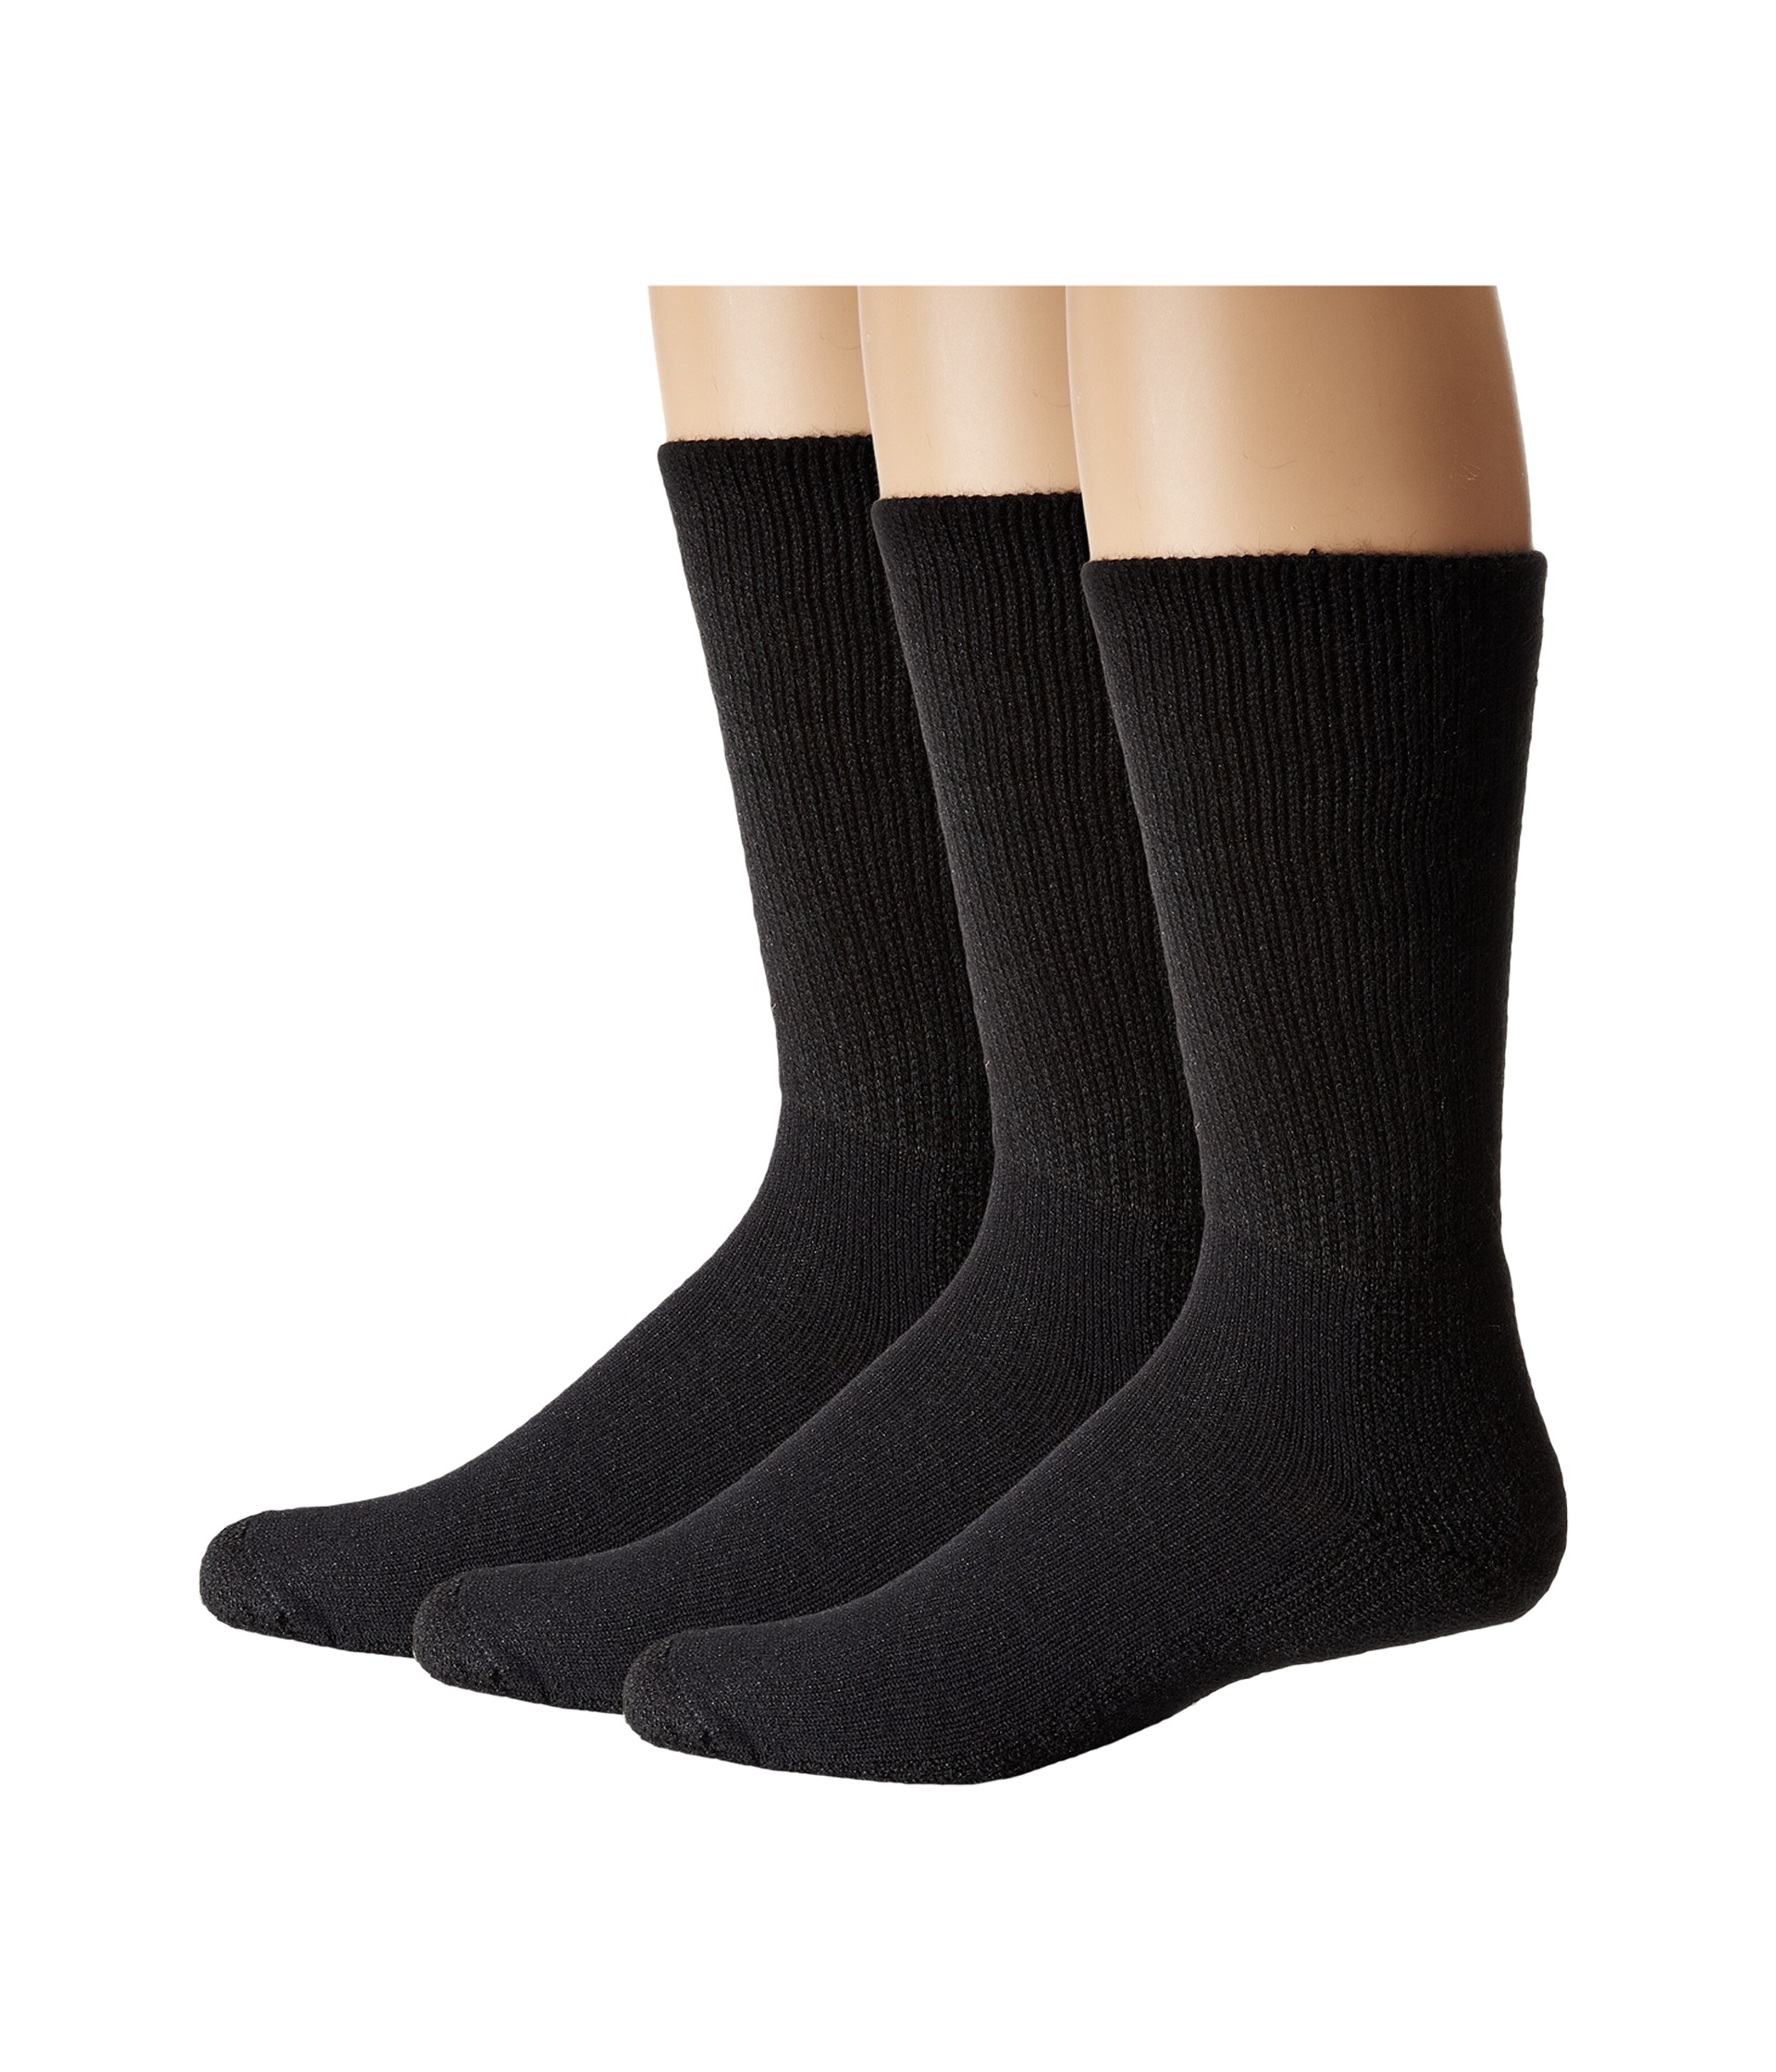 Thorlo western dress socks